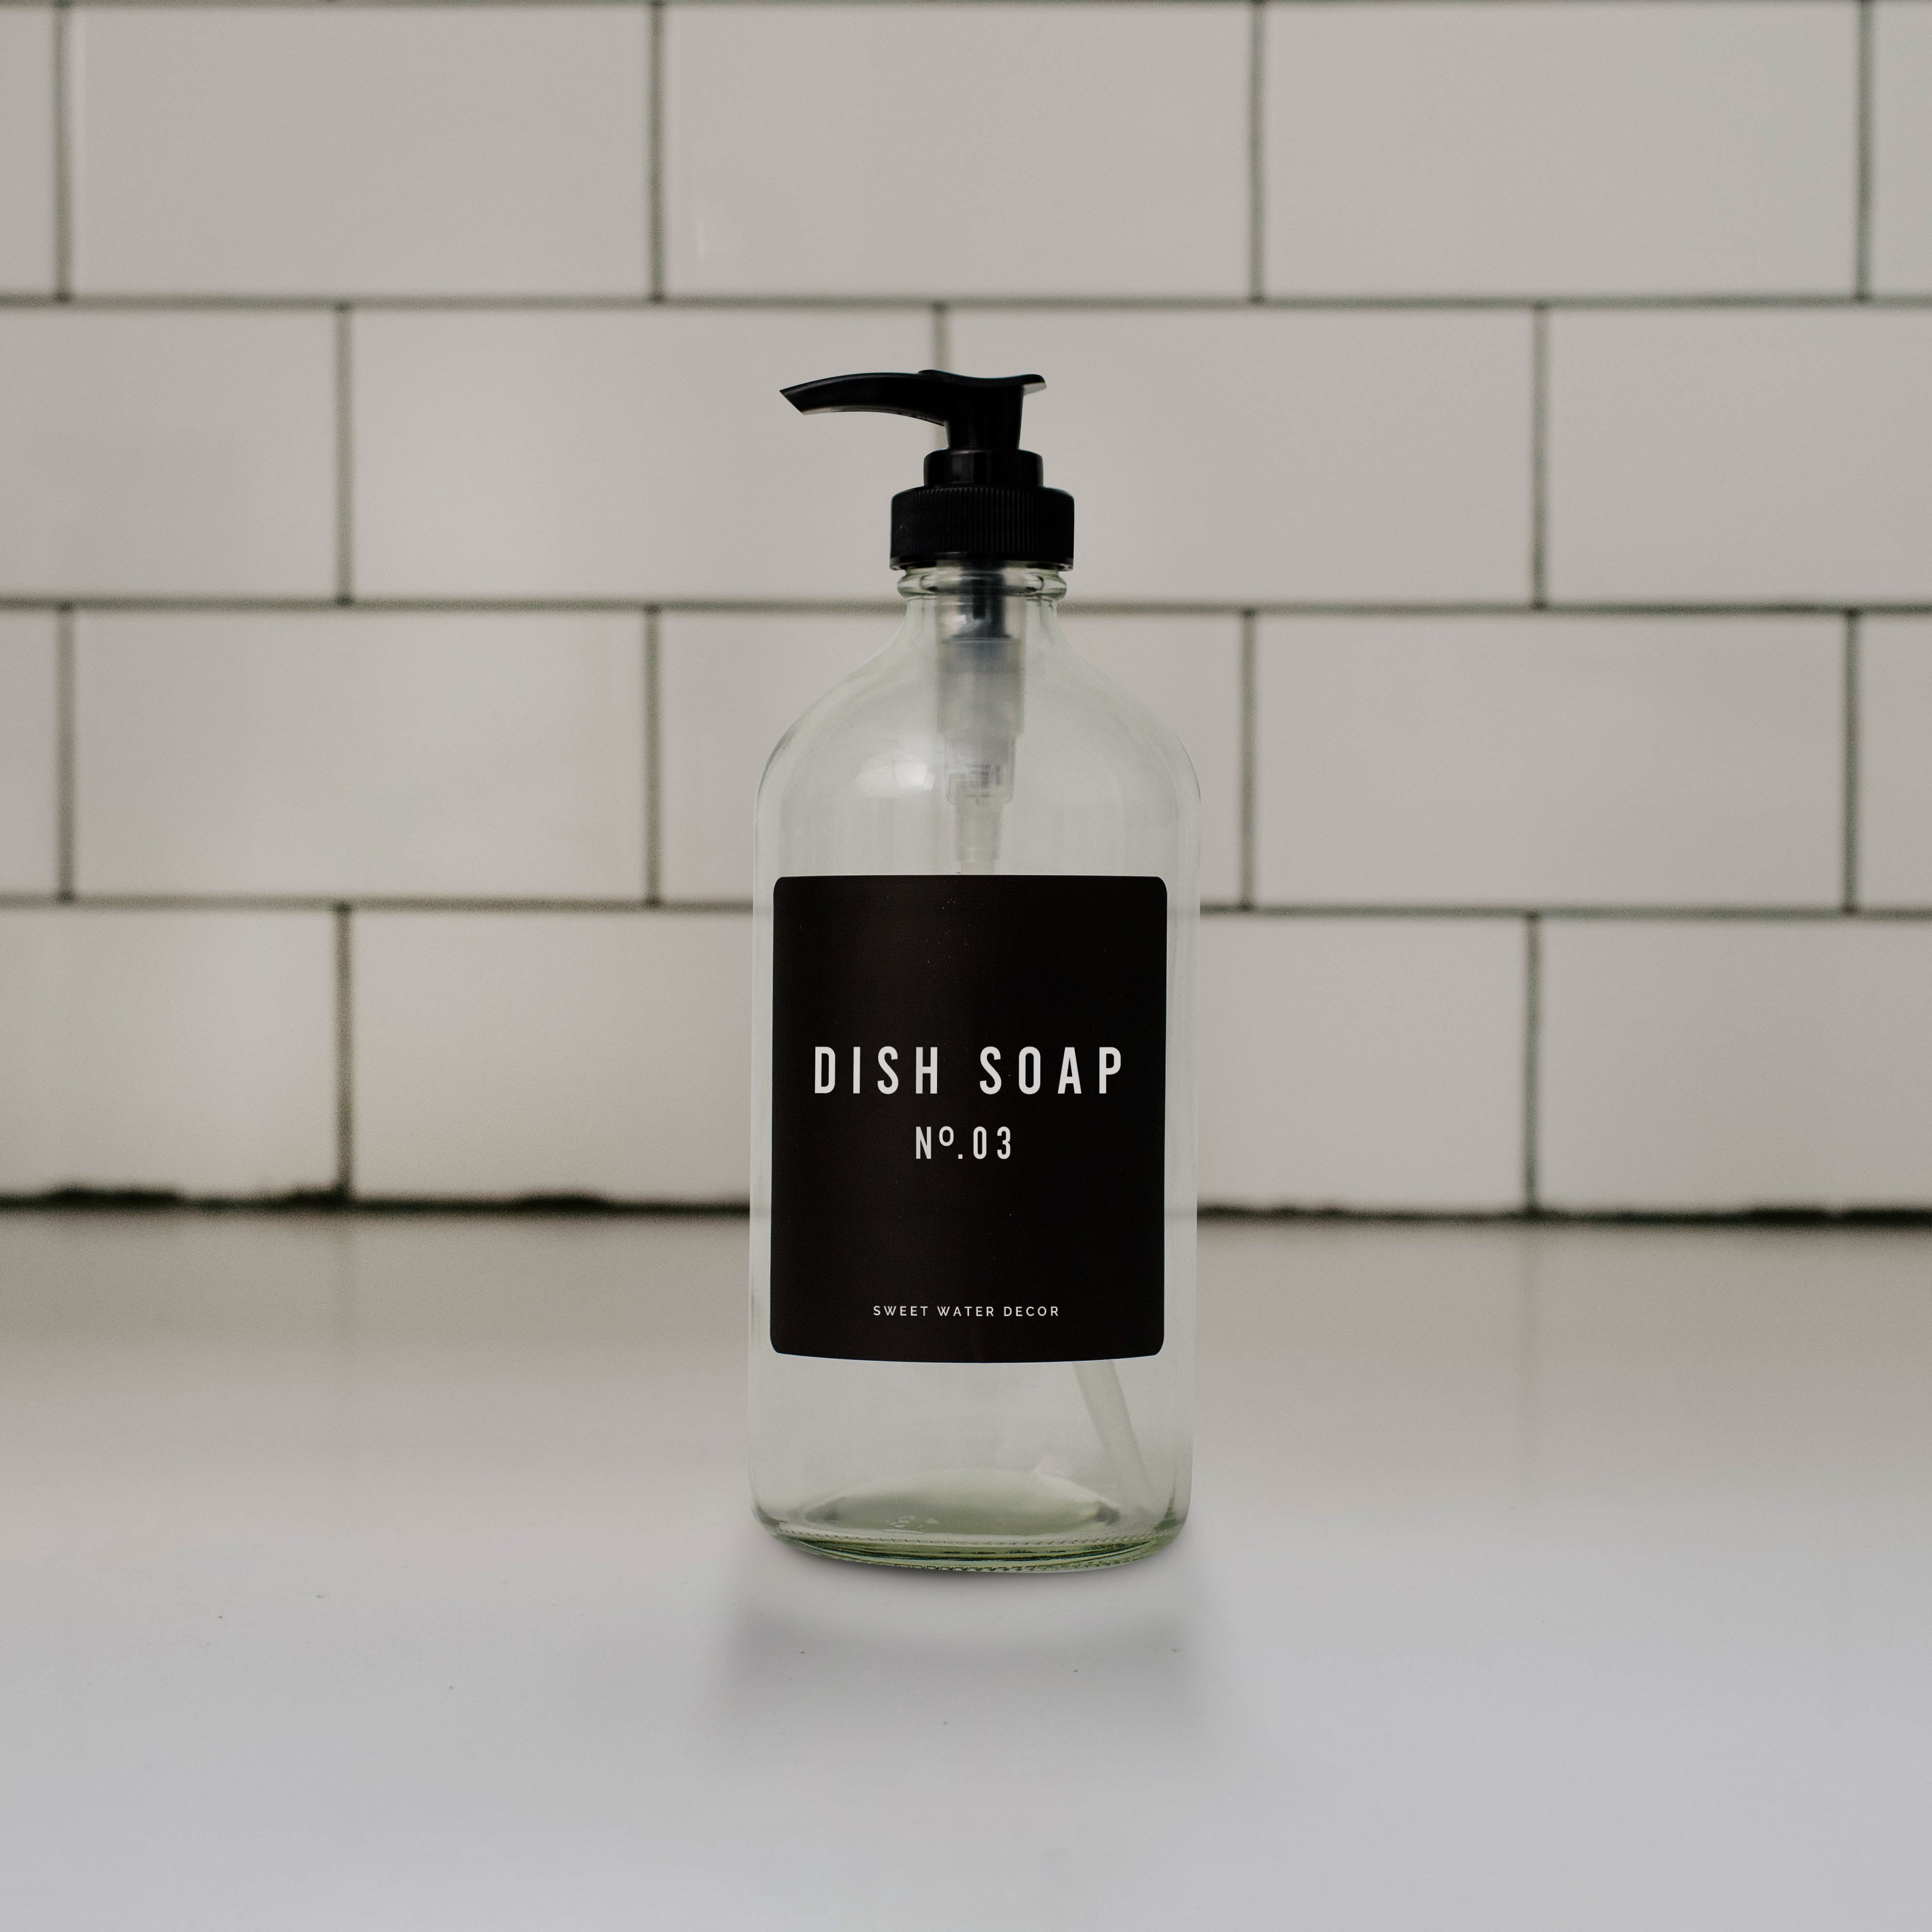 16oz Clear Glass Dish Soap Dispenser - Black Label